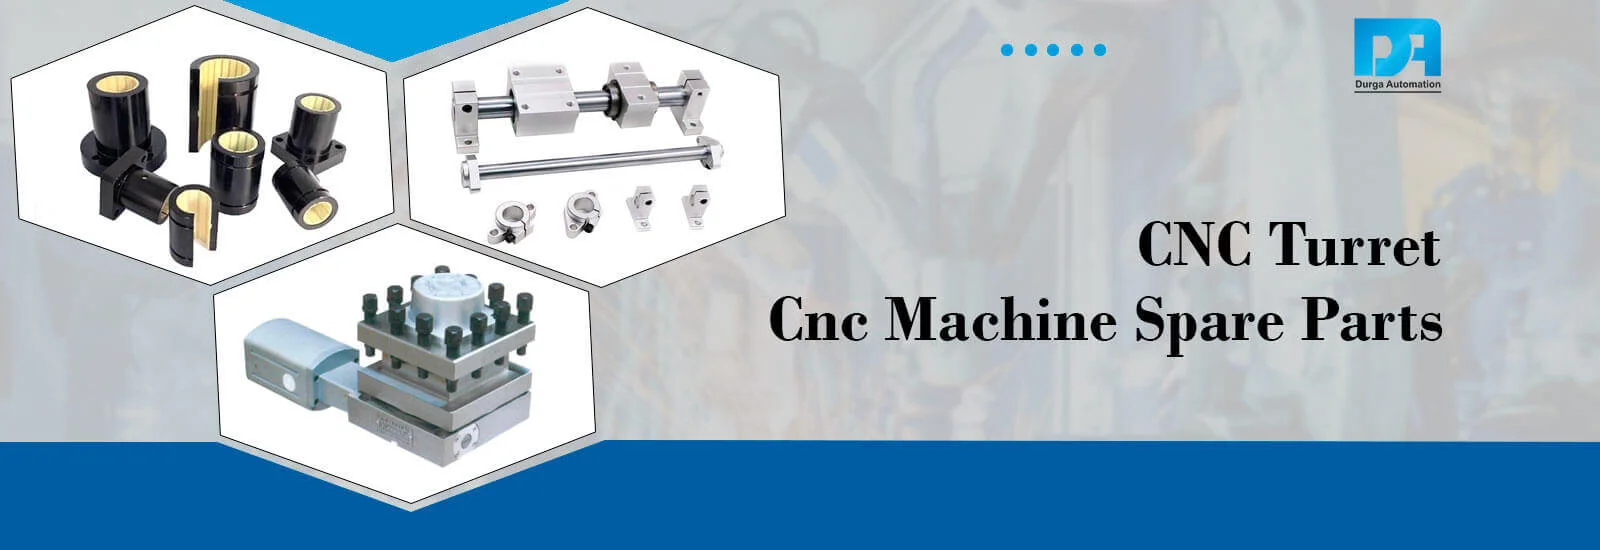 Cnc Machine Spare Parts Supplier in India